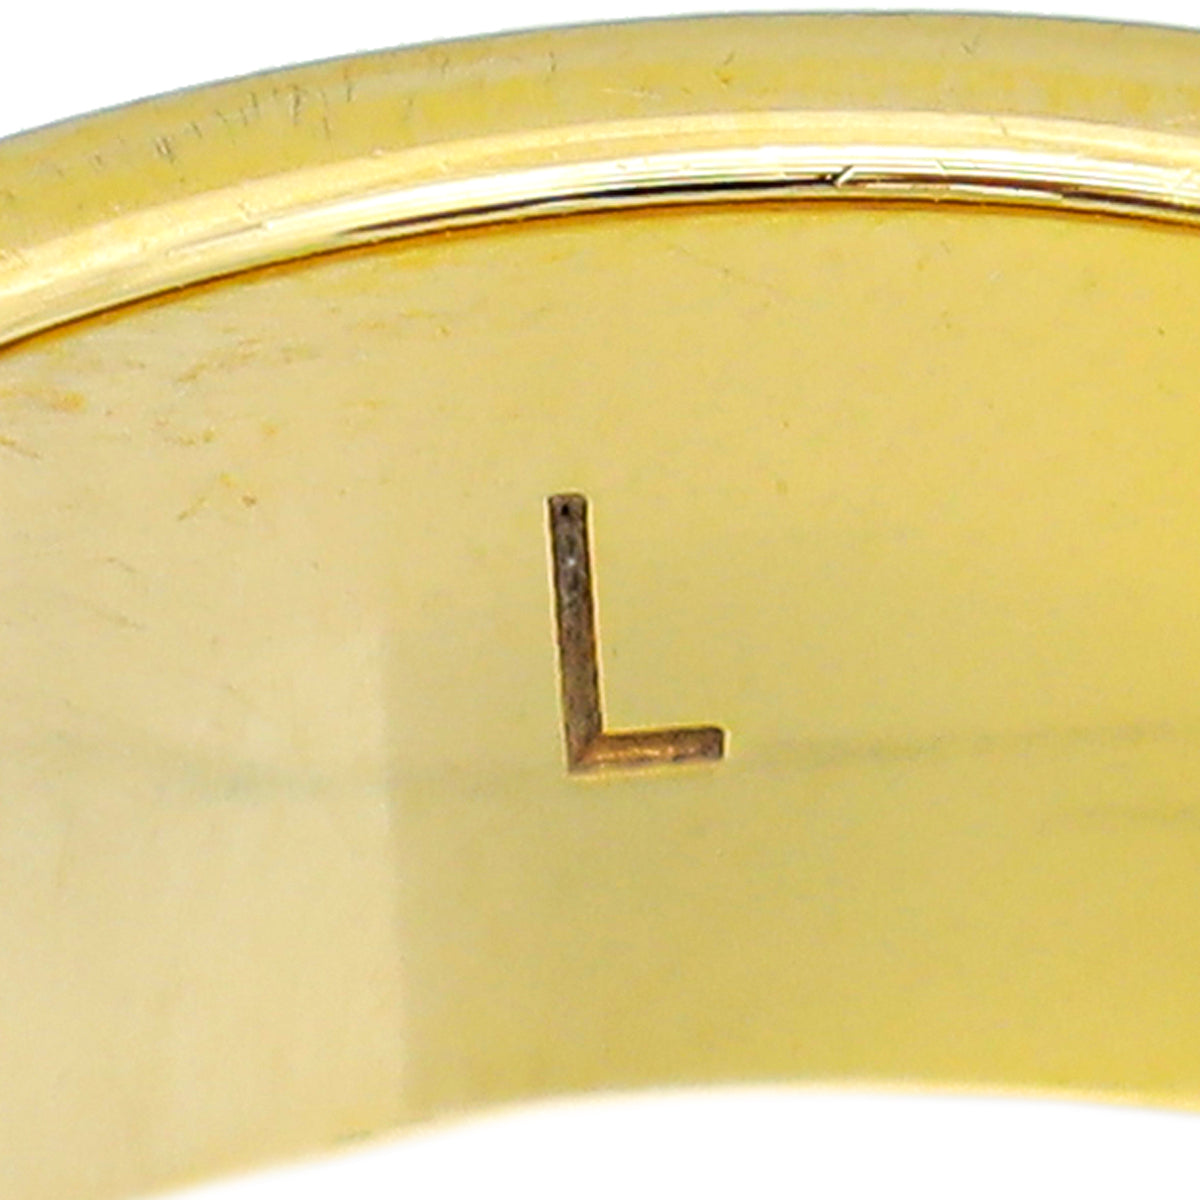 Fendi Gold FF Large Ring